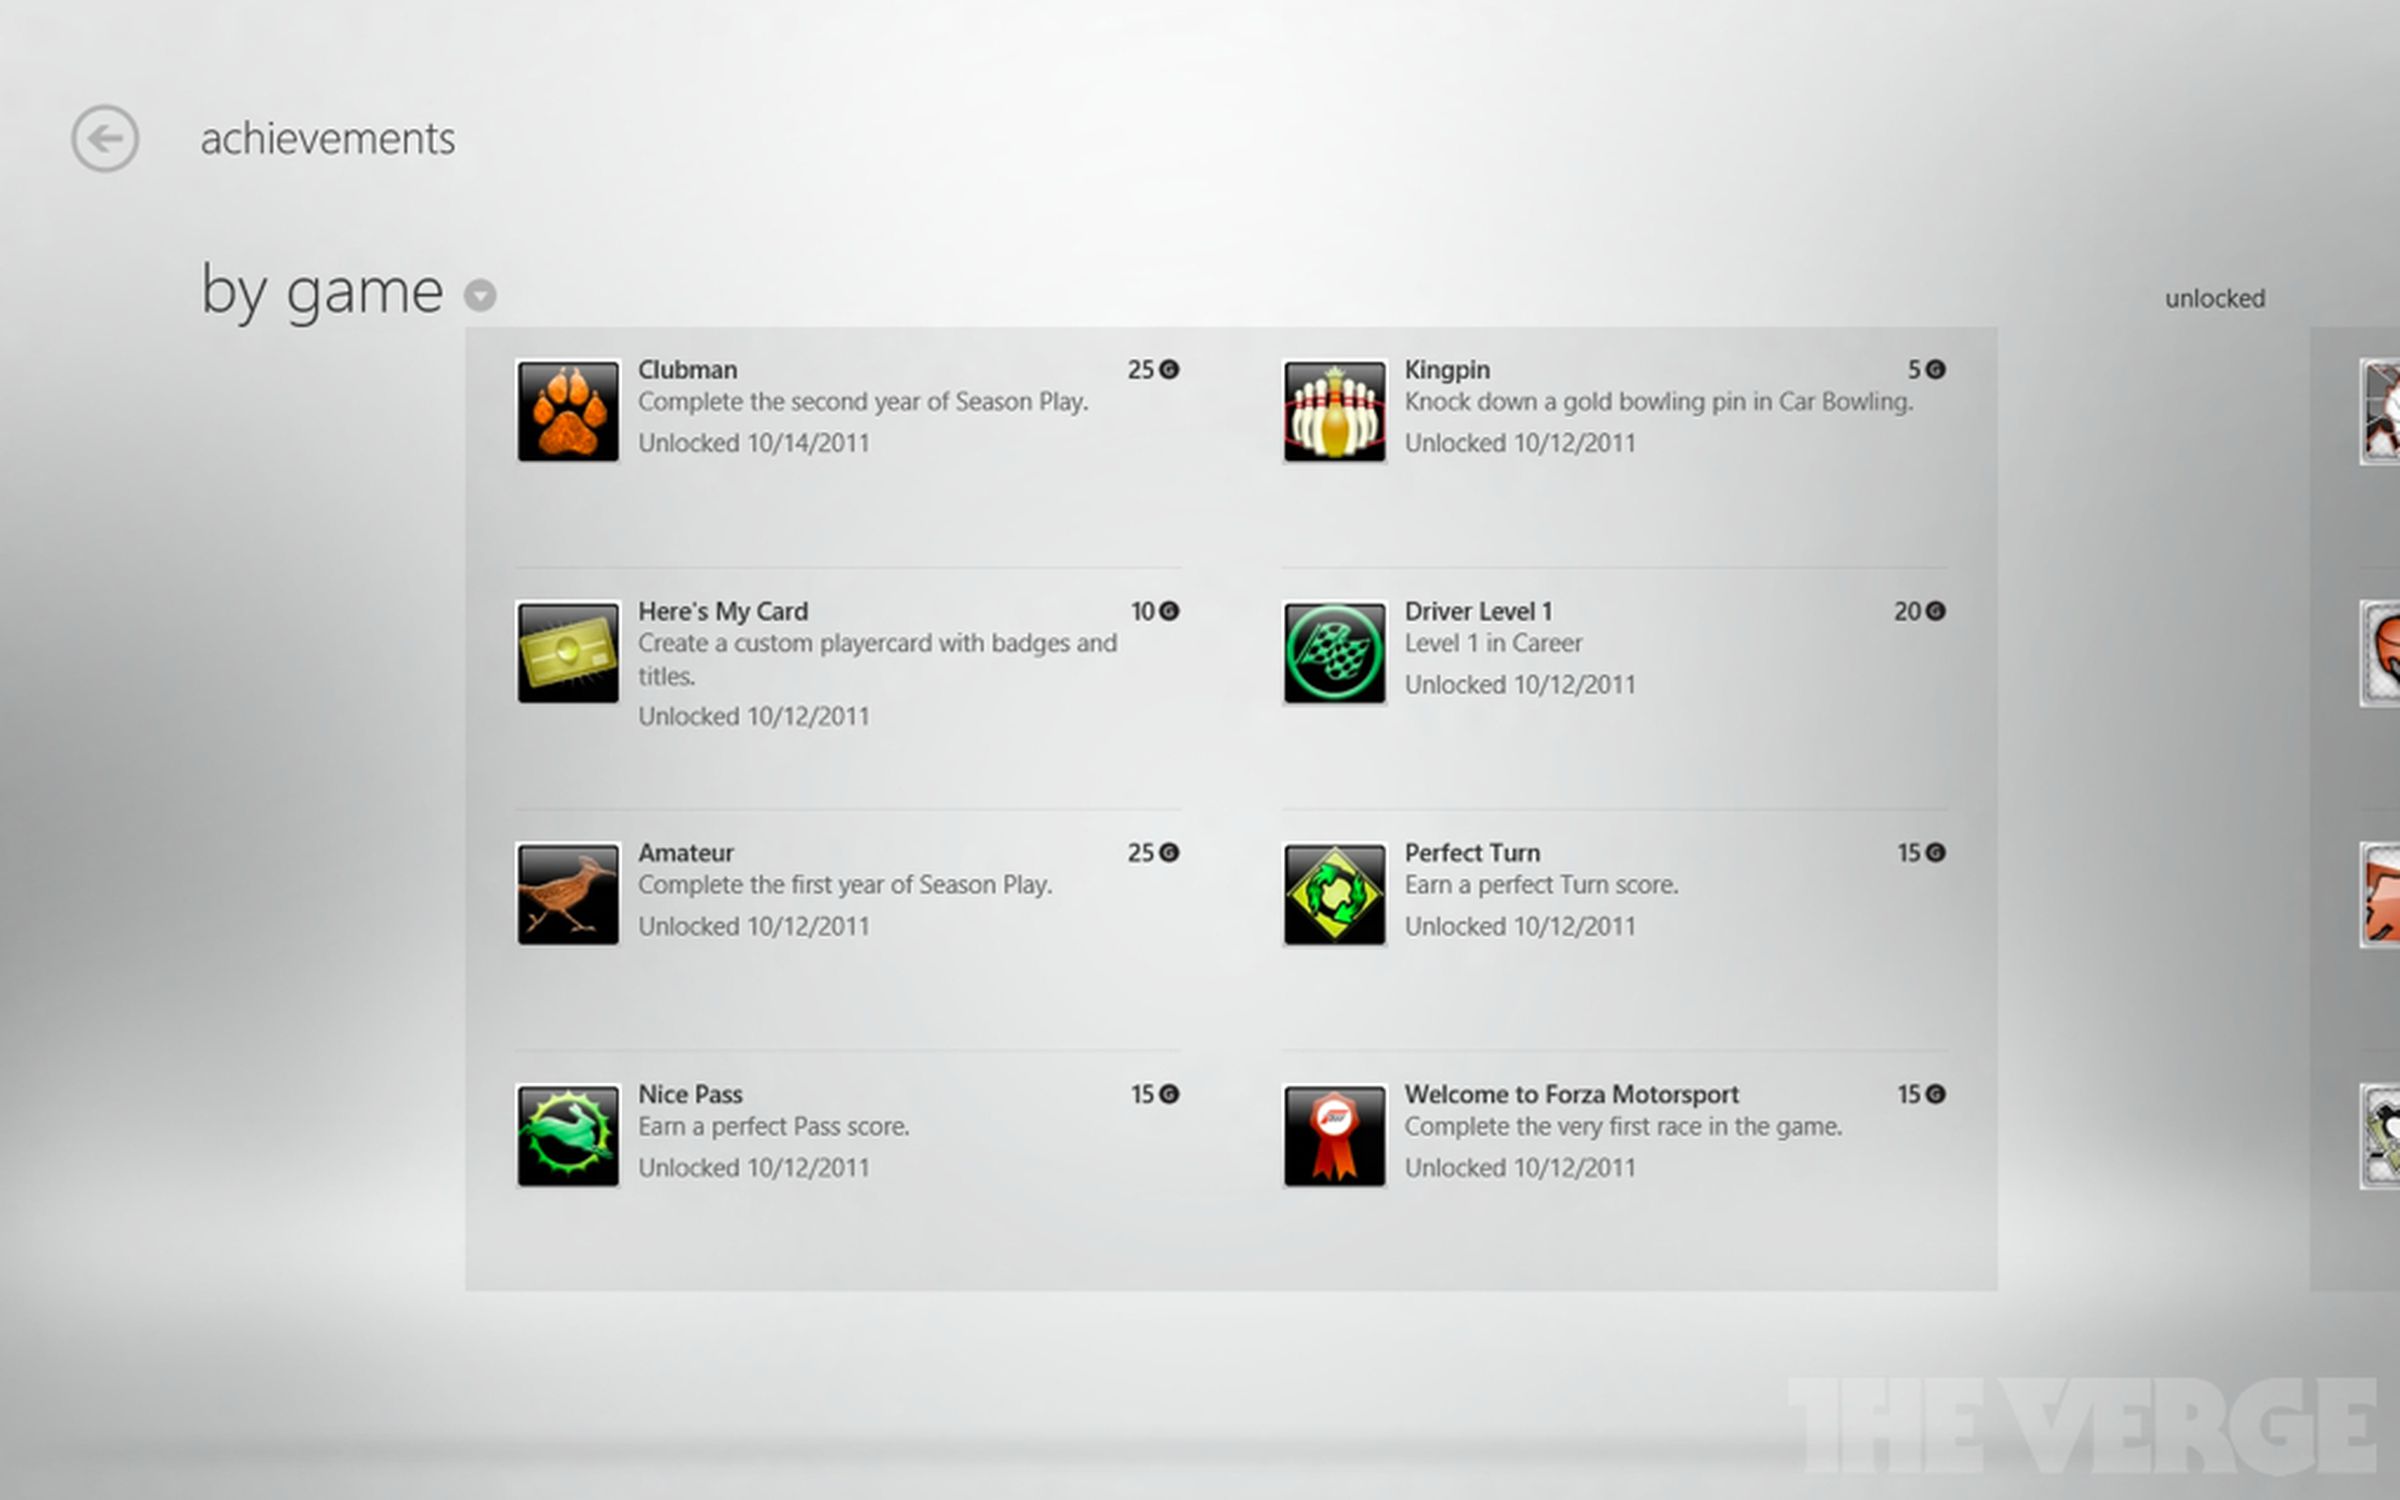 Windows 8 Xbox Live, music, and video screenshots